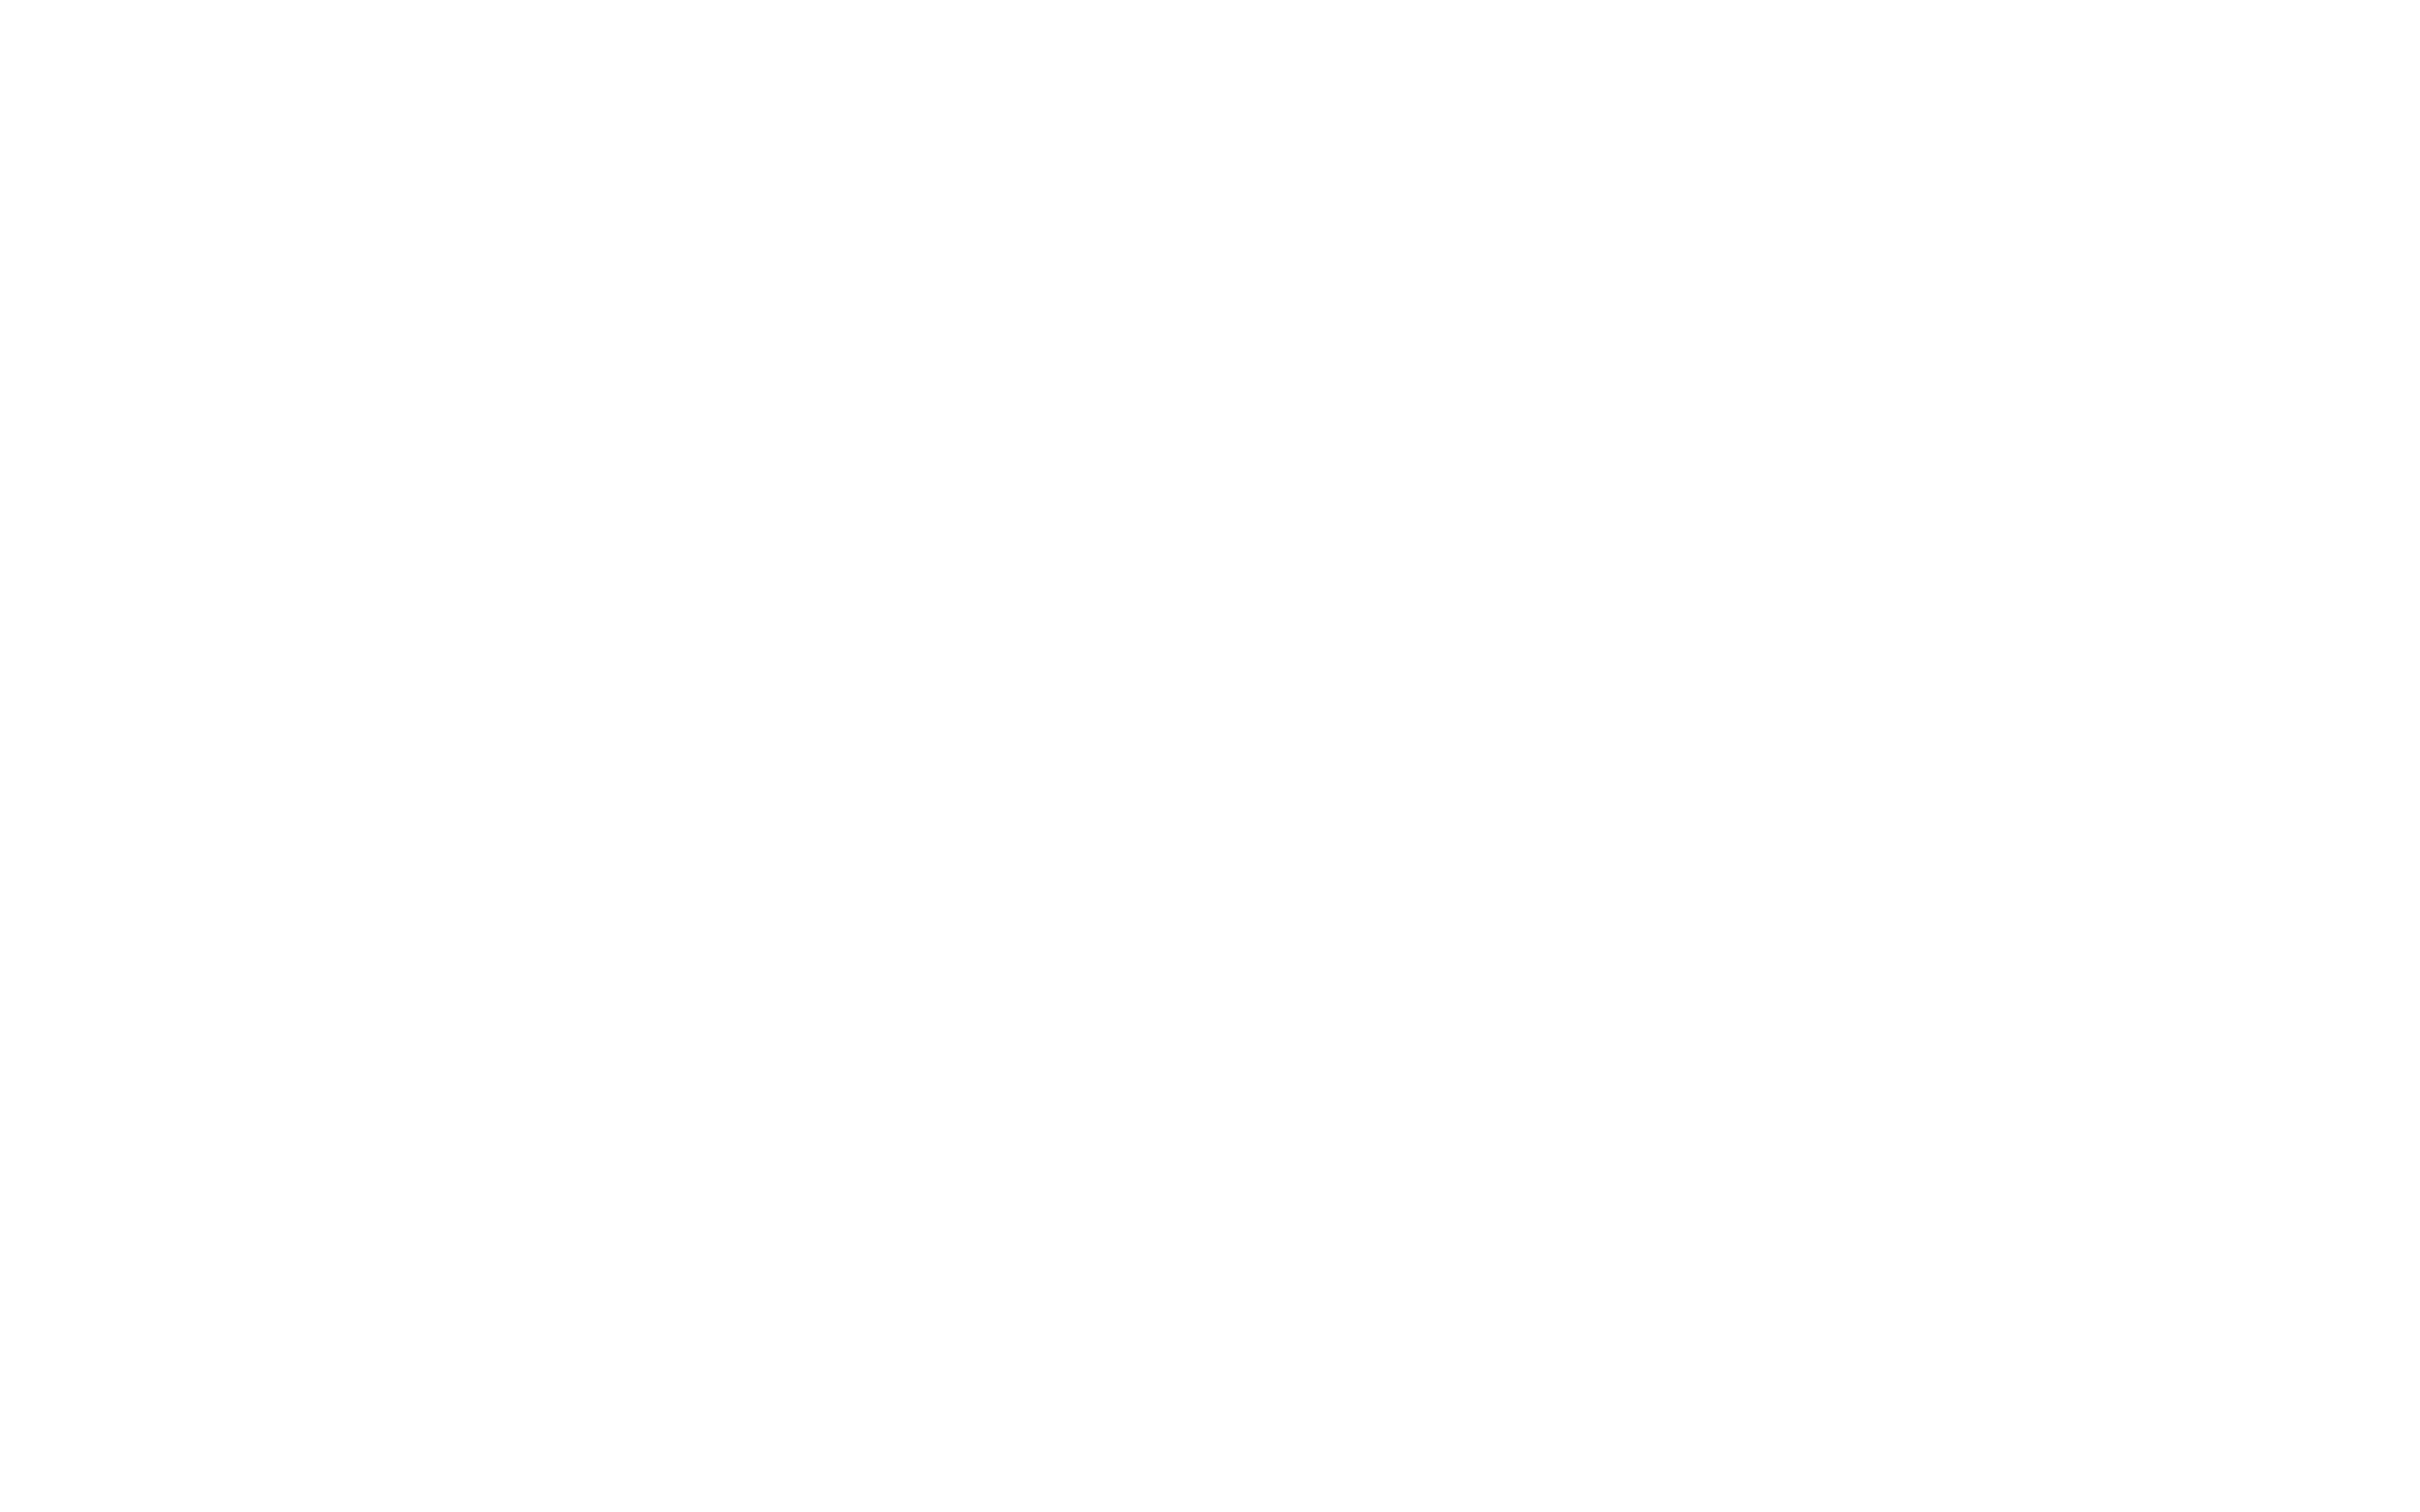 Franconieri & Partners